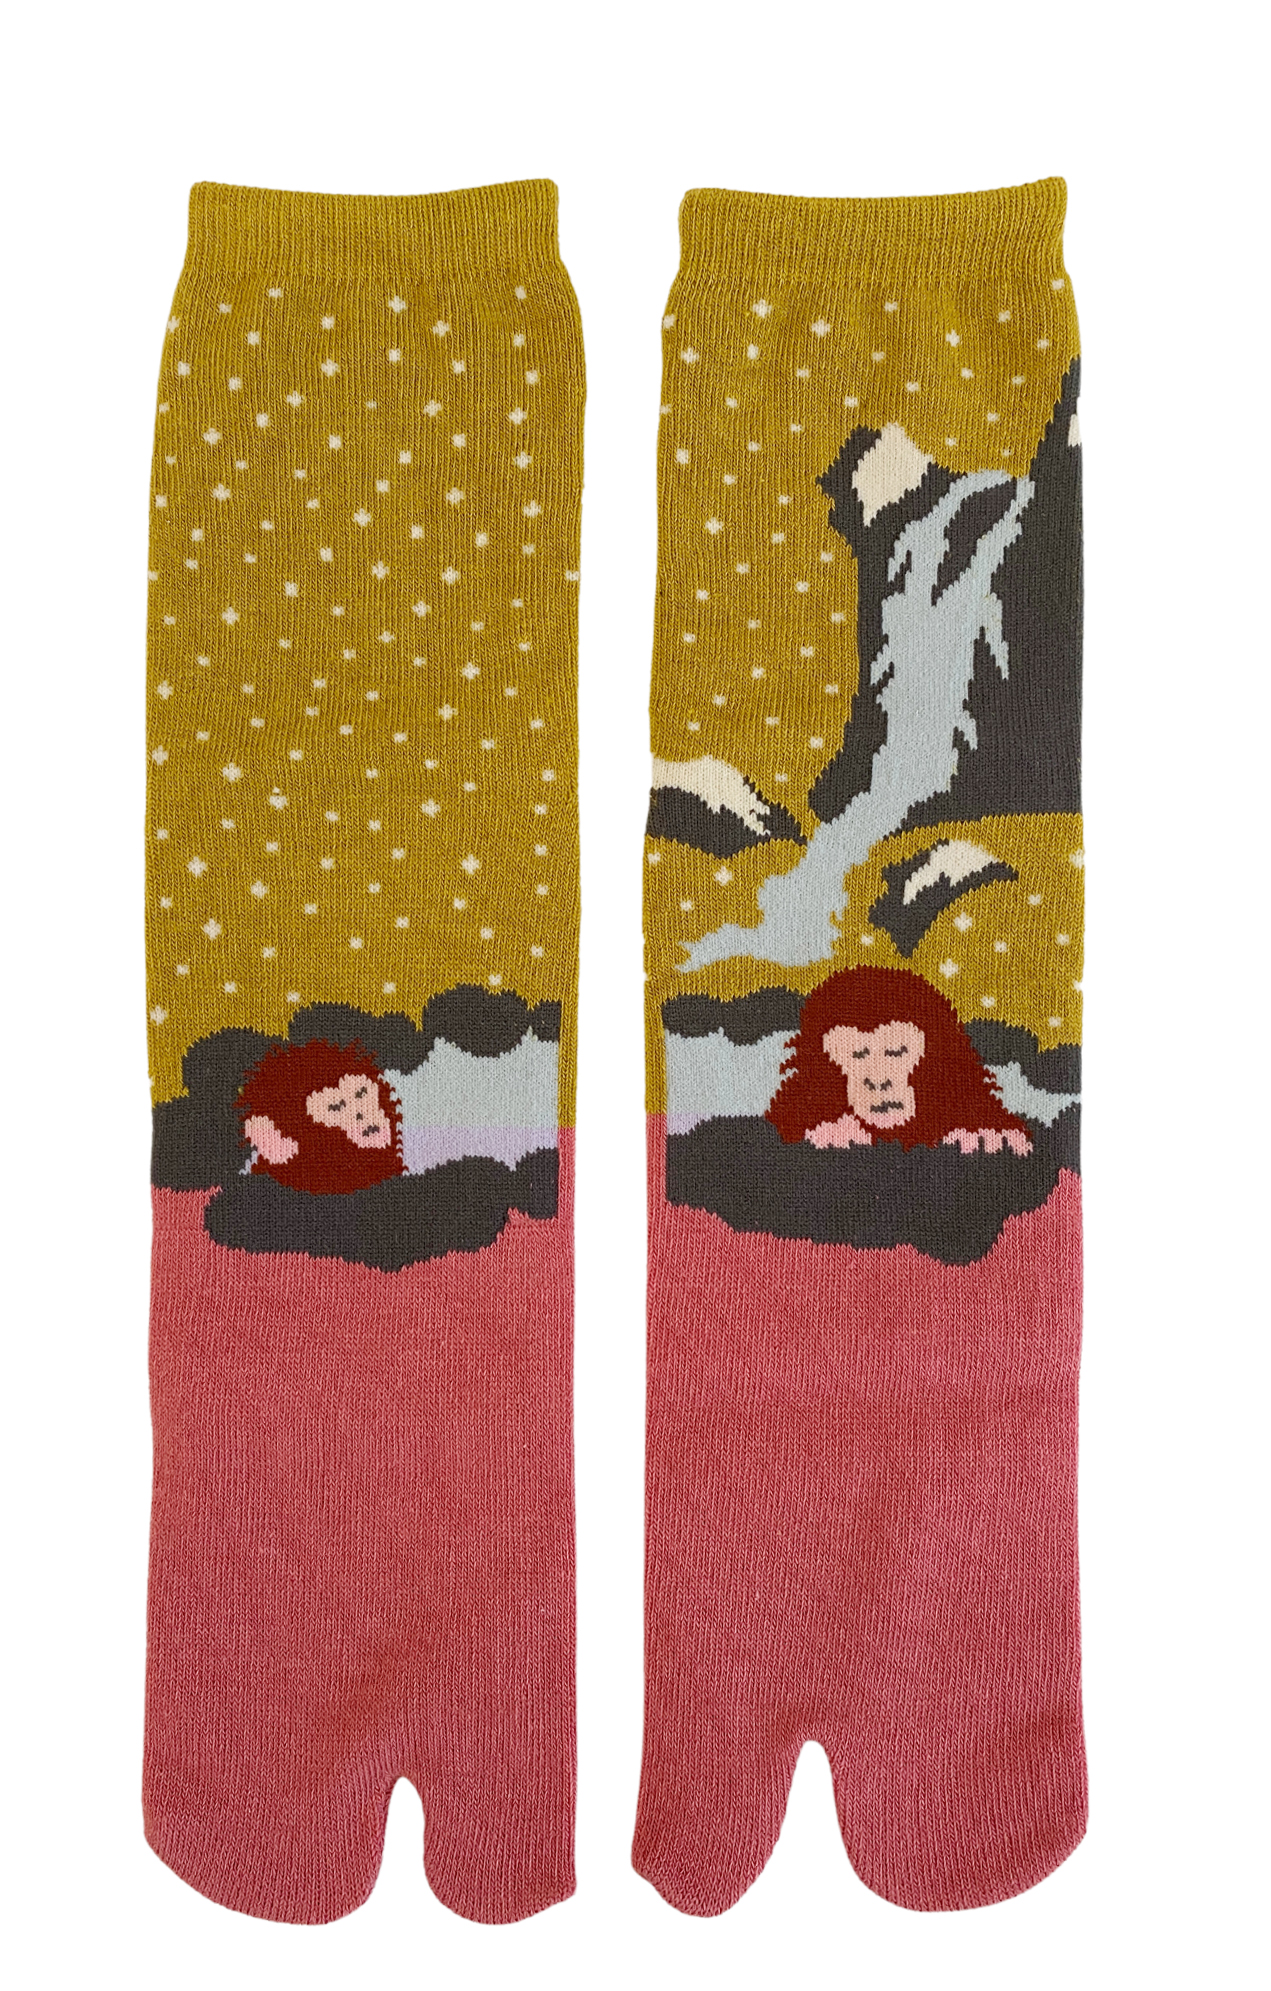 5434 onsen bath monkey toe tabi socks pink